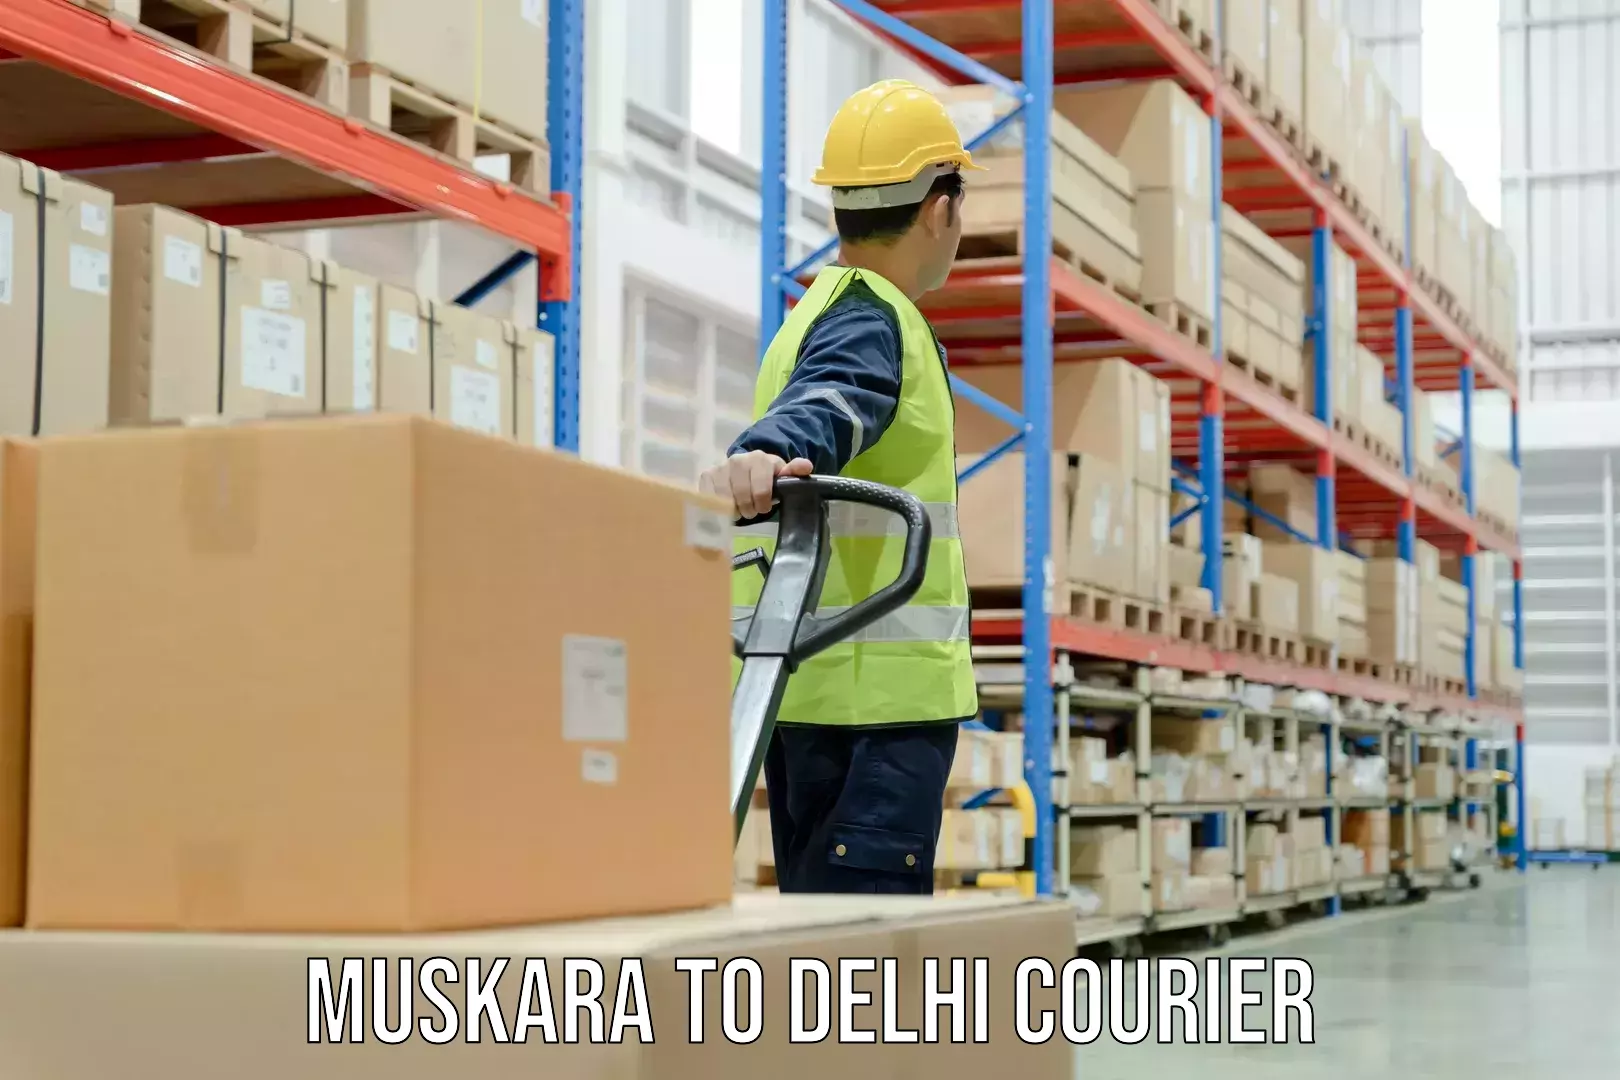 Remote area delivery in Muskara to East Delhi